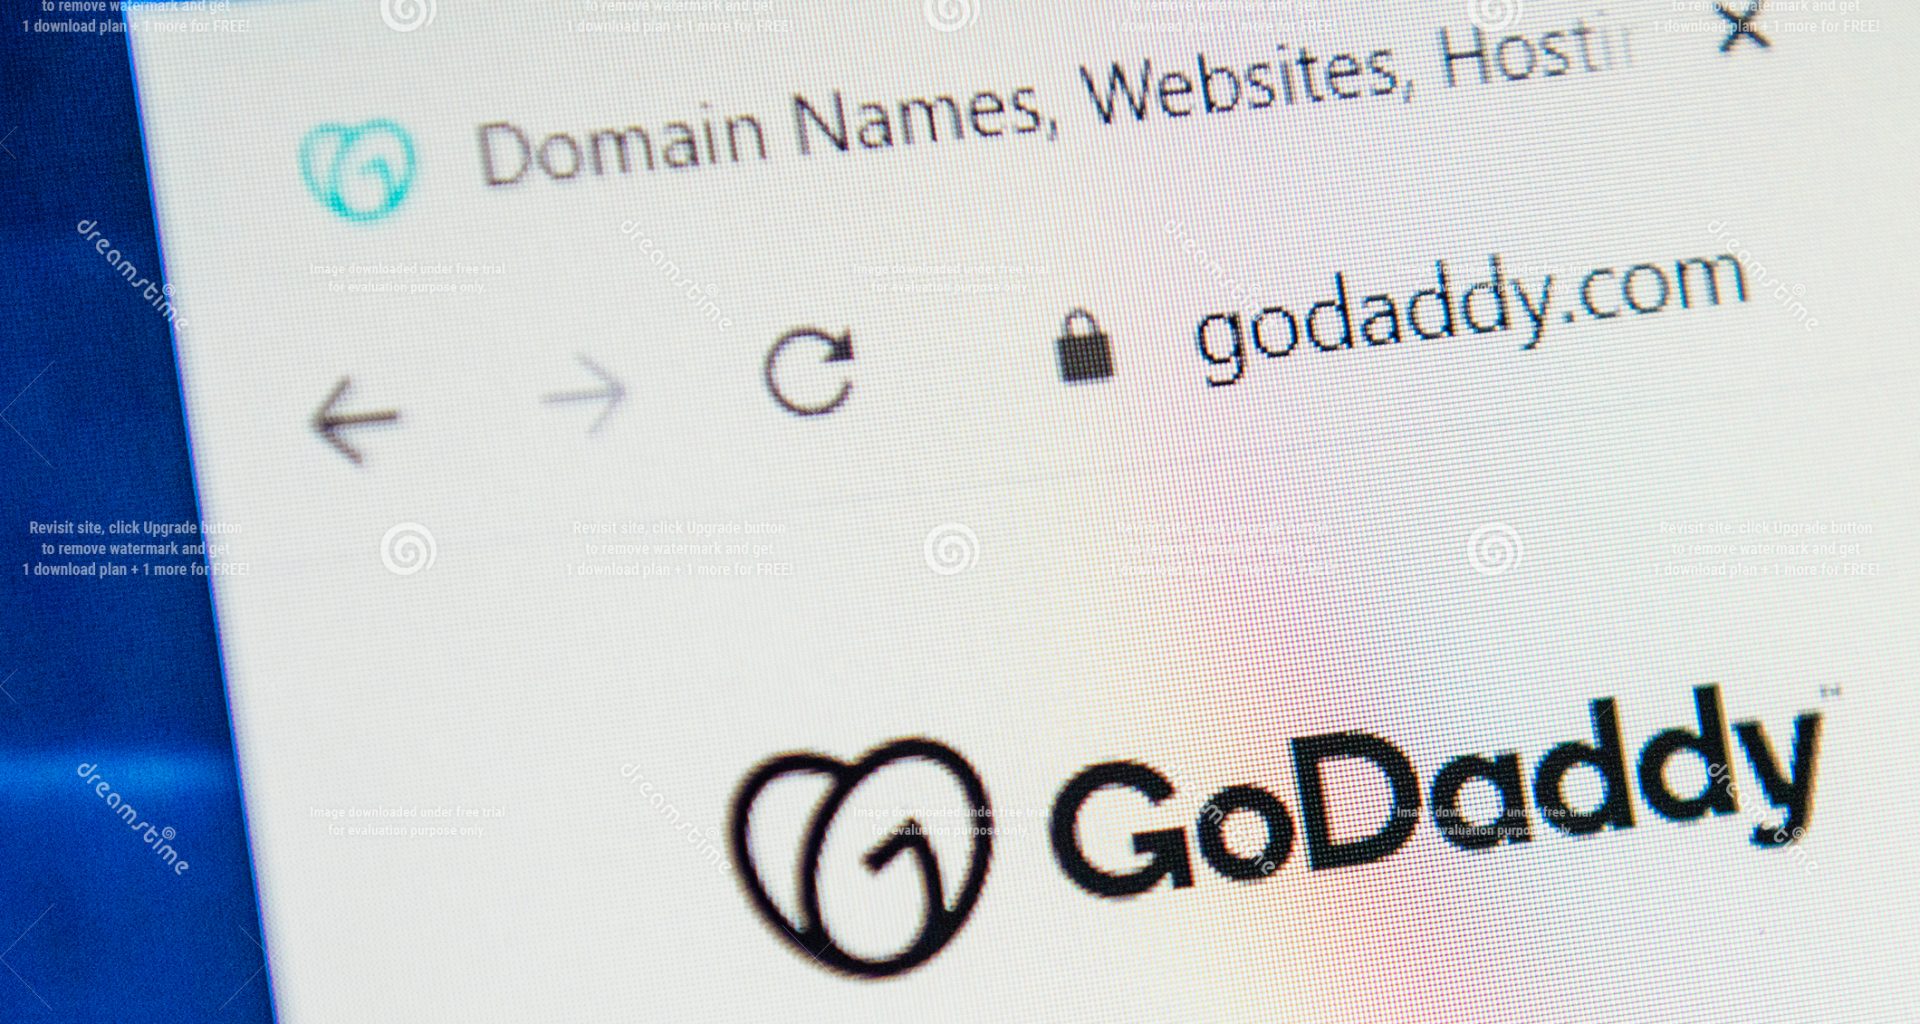 Does GoDaddy Offer an SSL Certificate? DevOps Squad